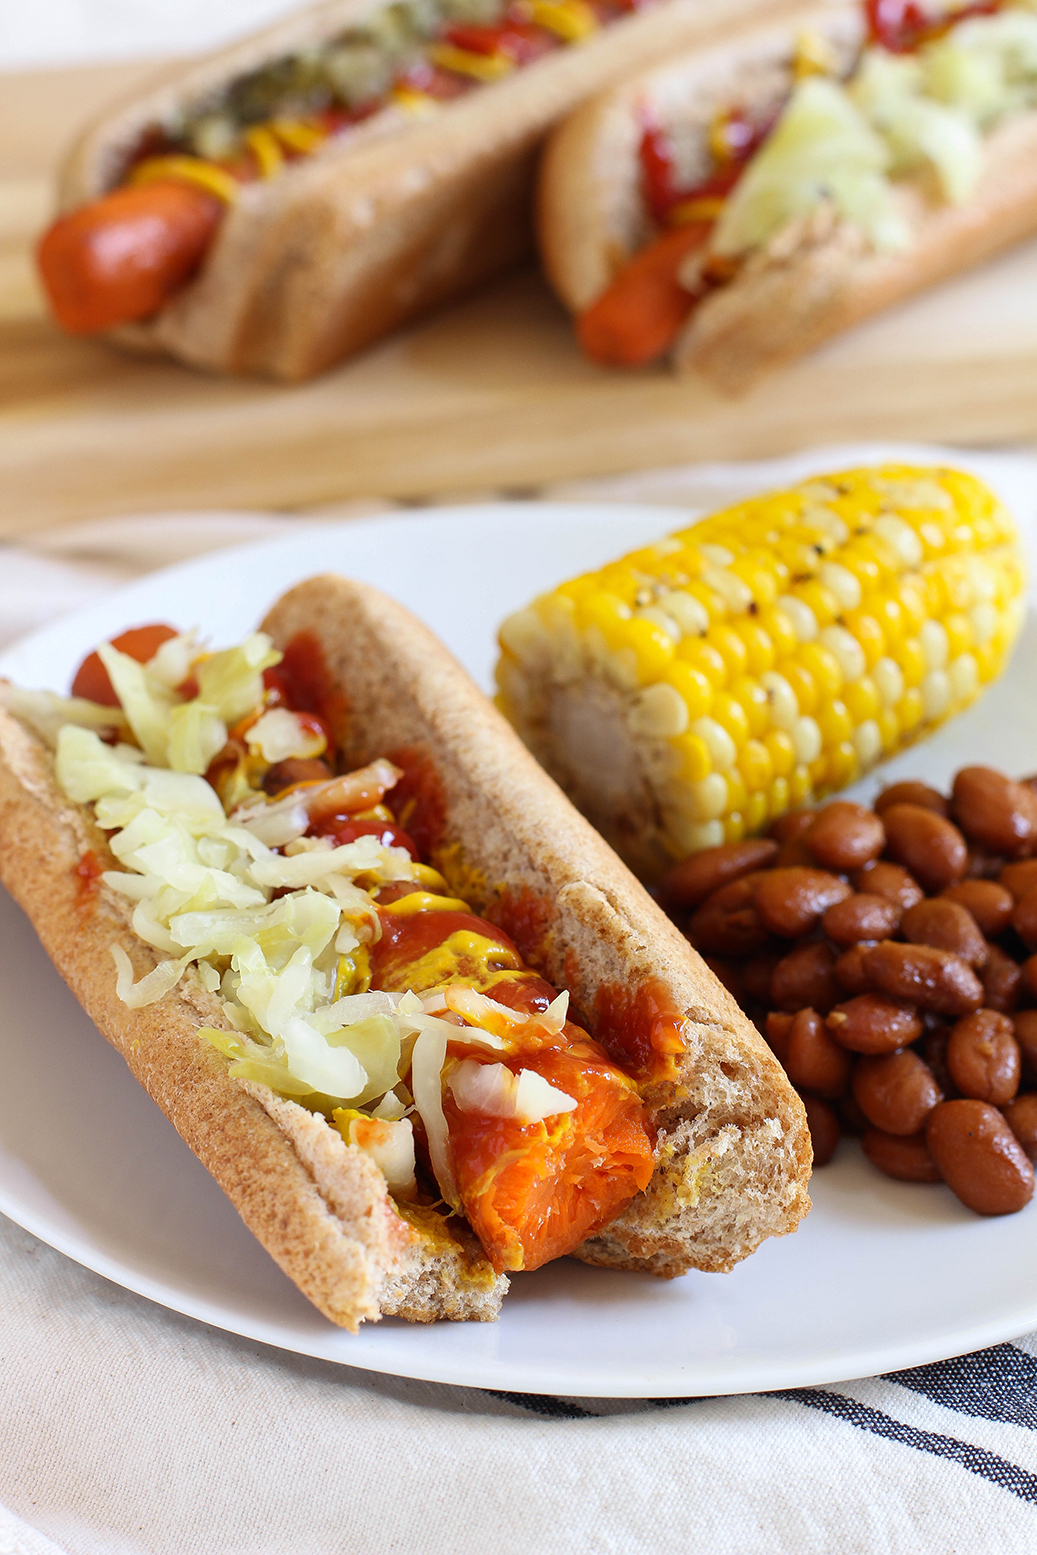 Vegan Carrot Hot Dogs | The Mostly Vegan